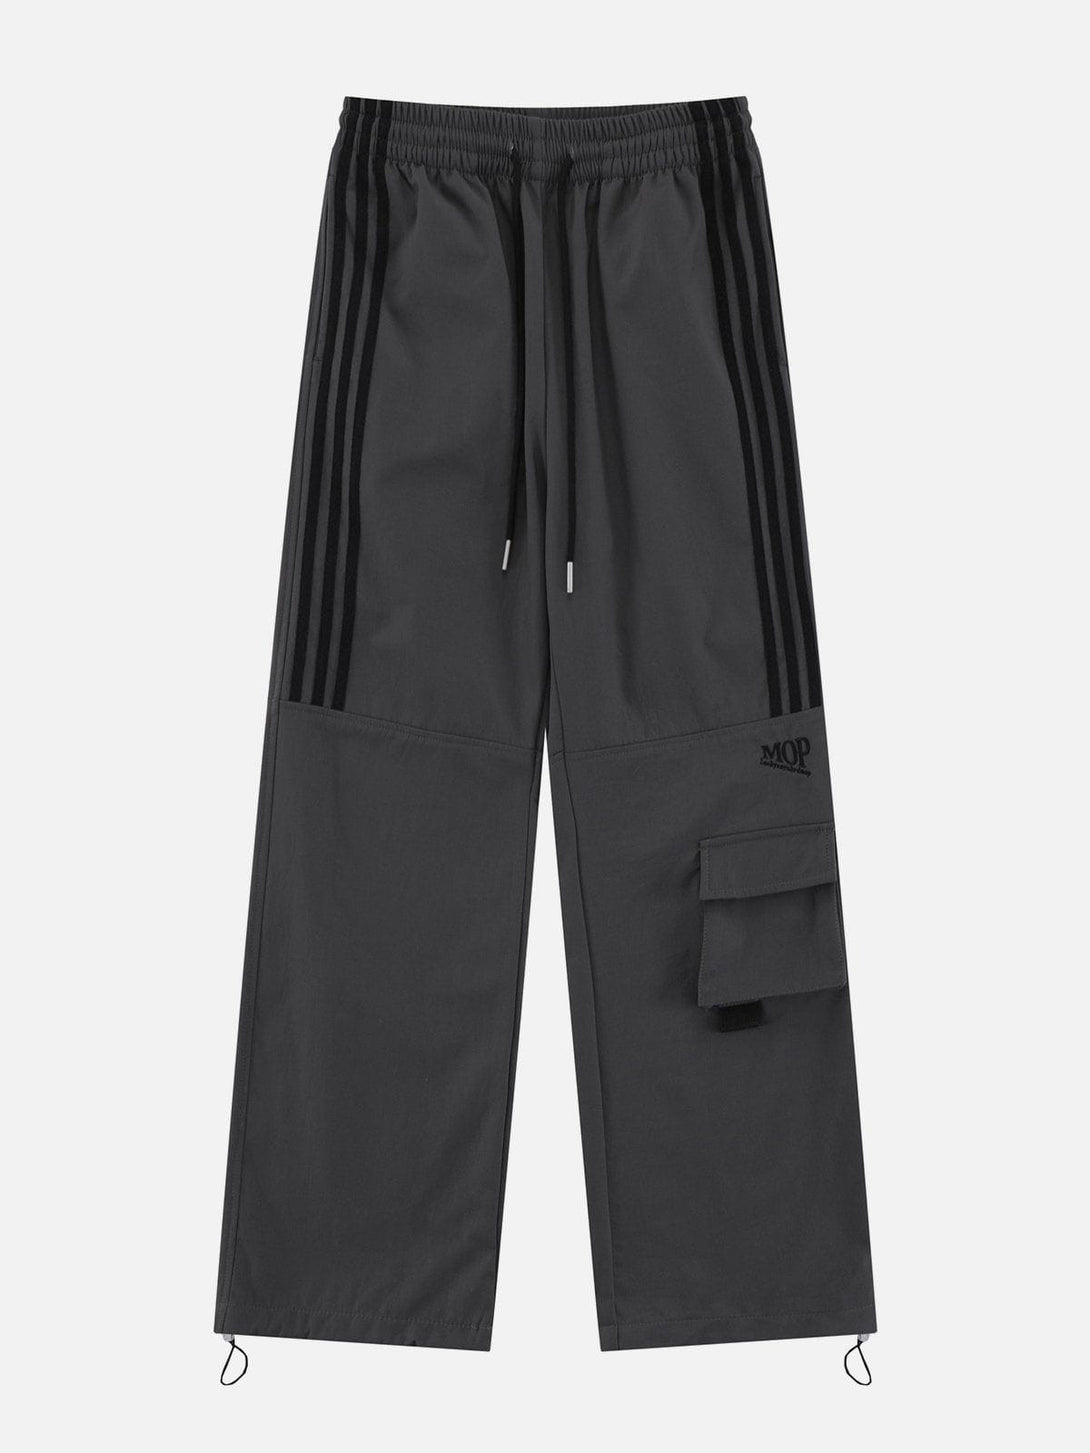 Majesda® - Tapered Leg Striped Sweatpants outfit ideas streetwear fashion